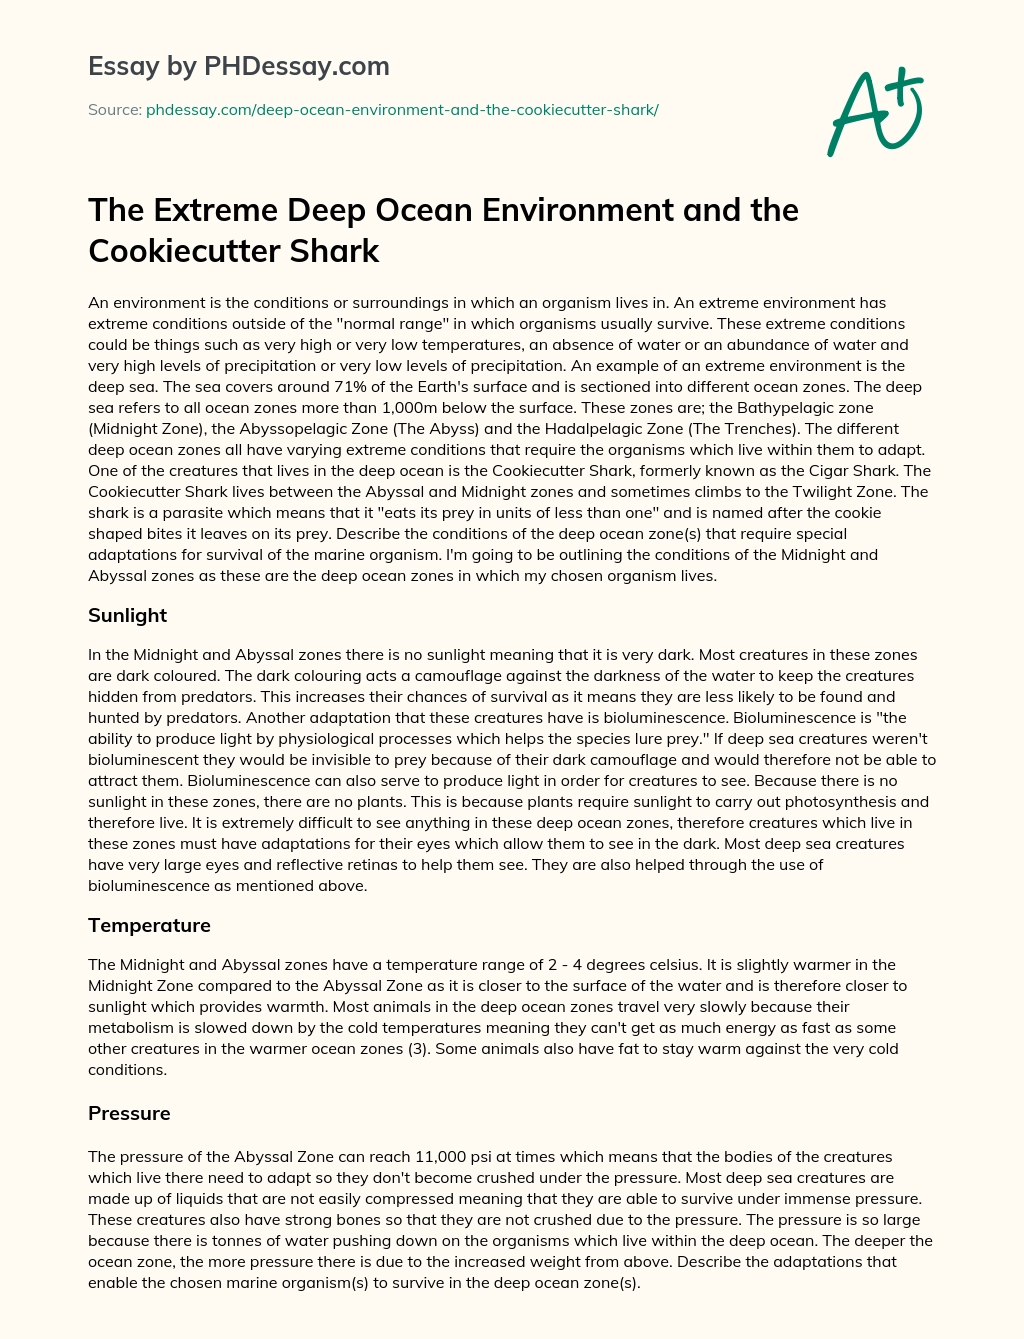 The Extreme Deep Ocean Environment and the Cookiecutter Shark essay